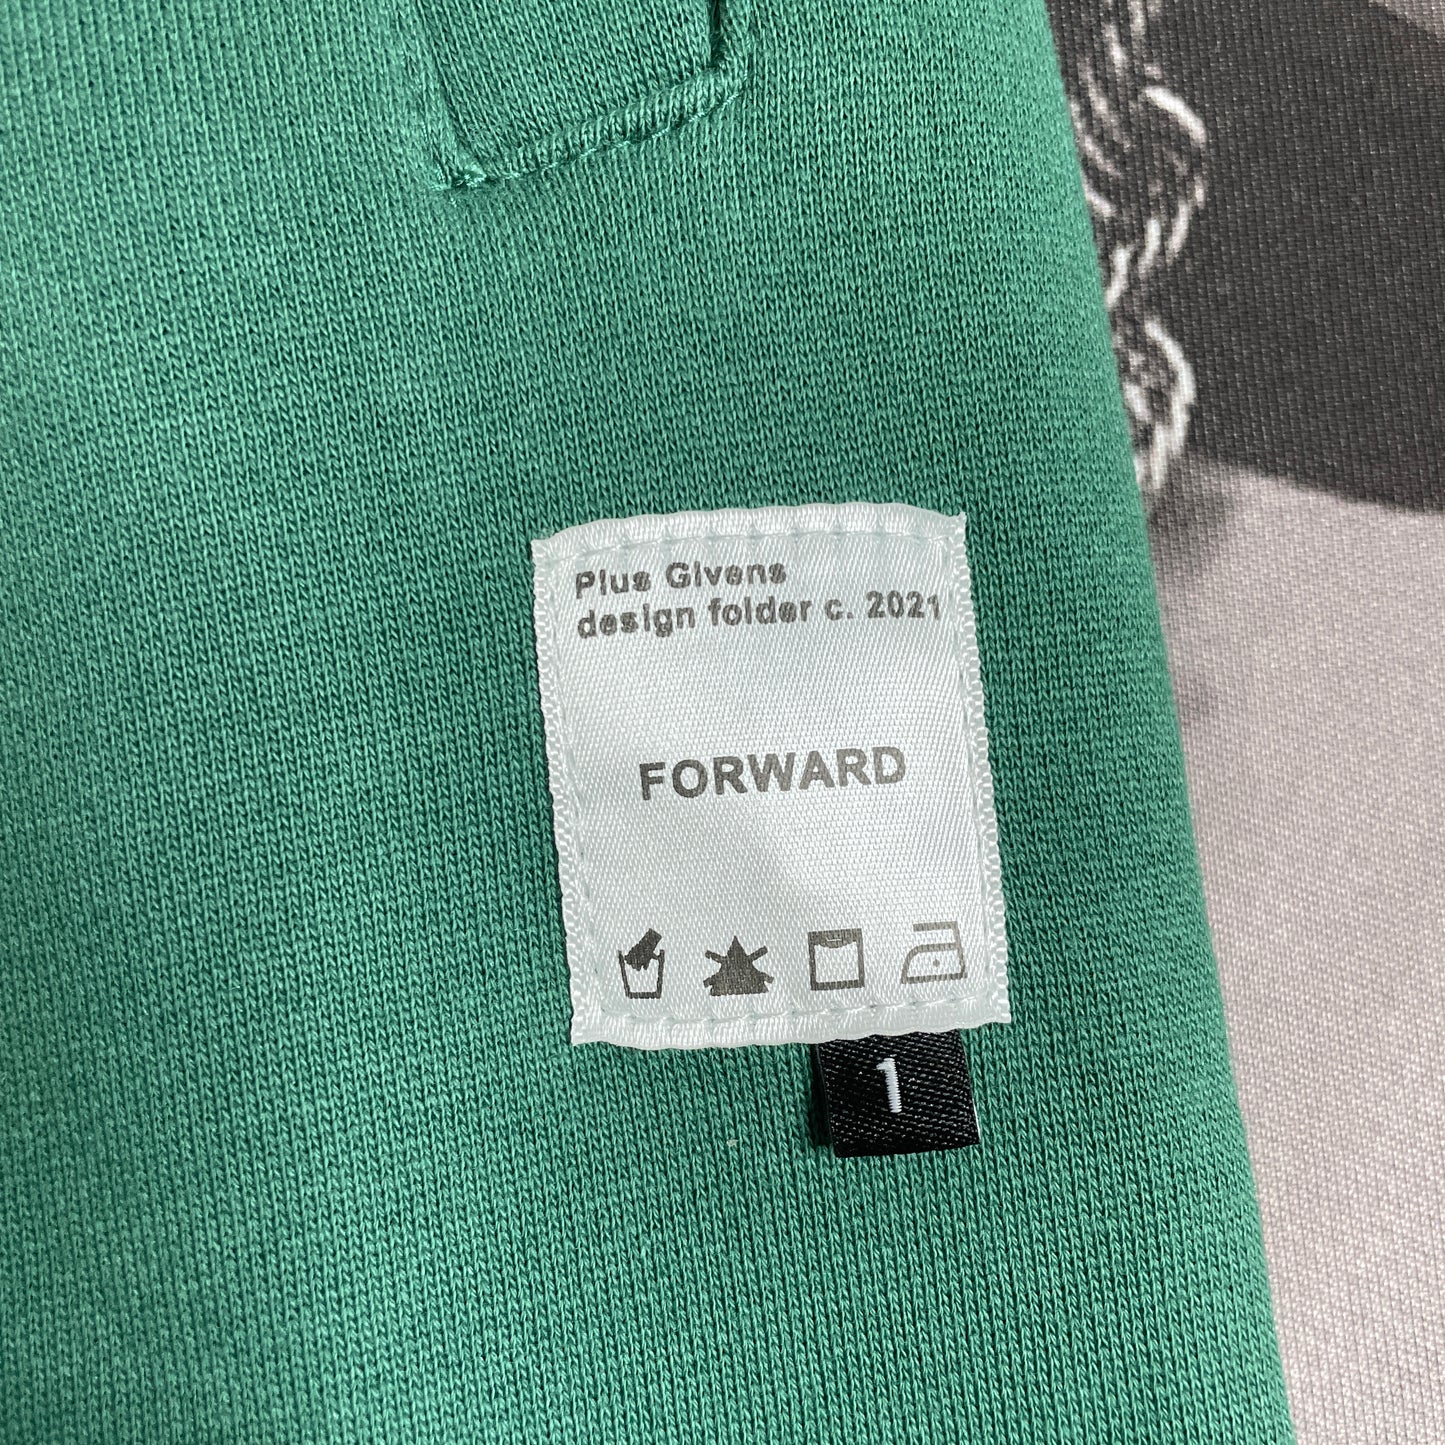 Plus Givens Design Folder Green Sweat Pant